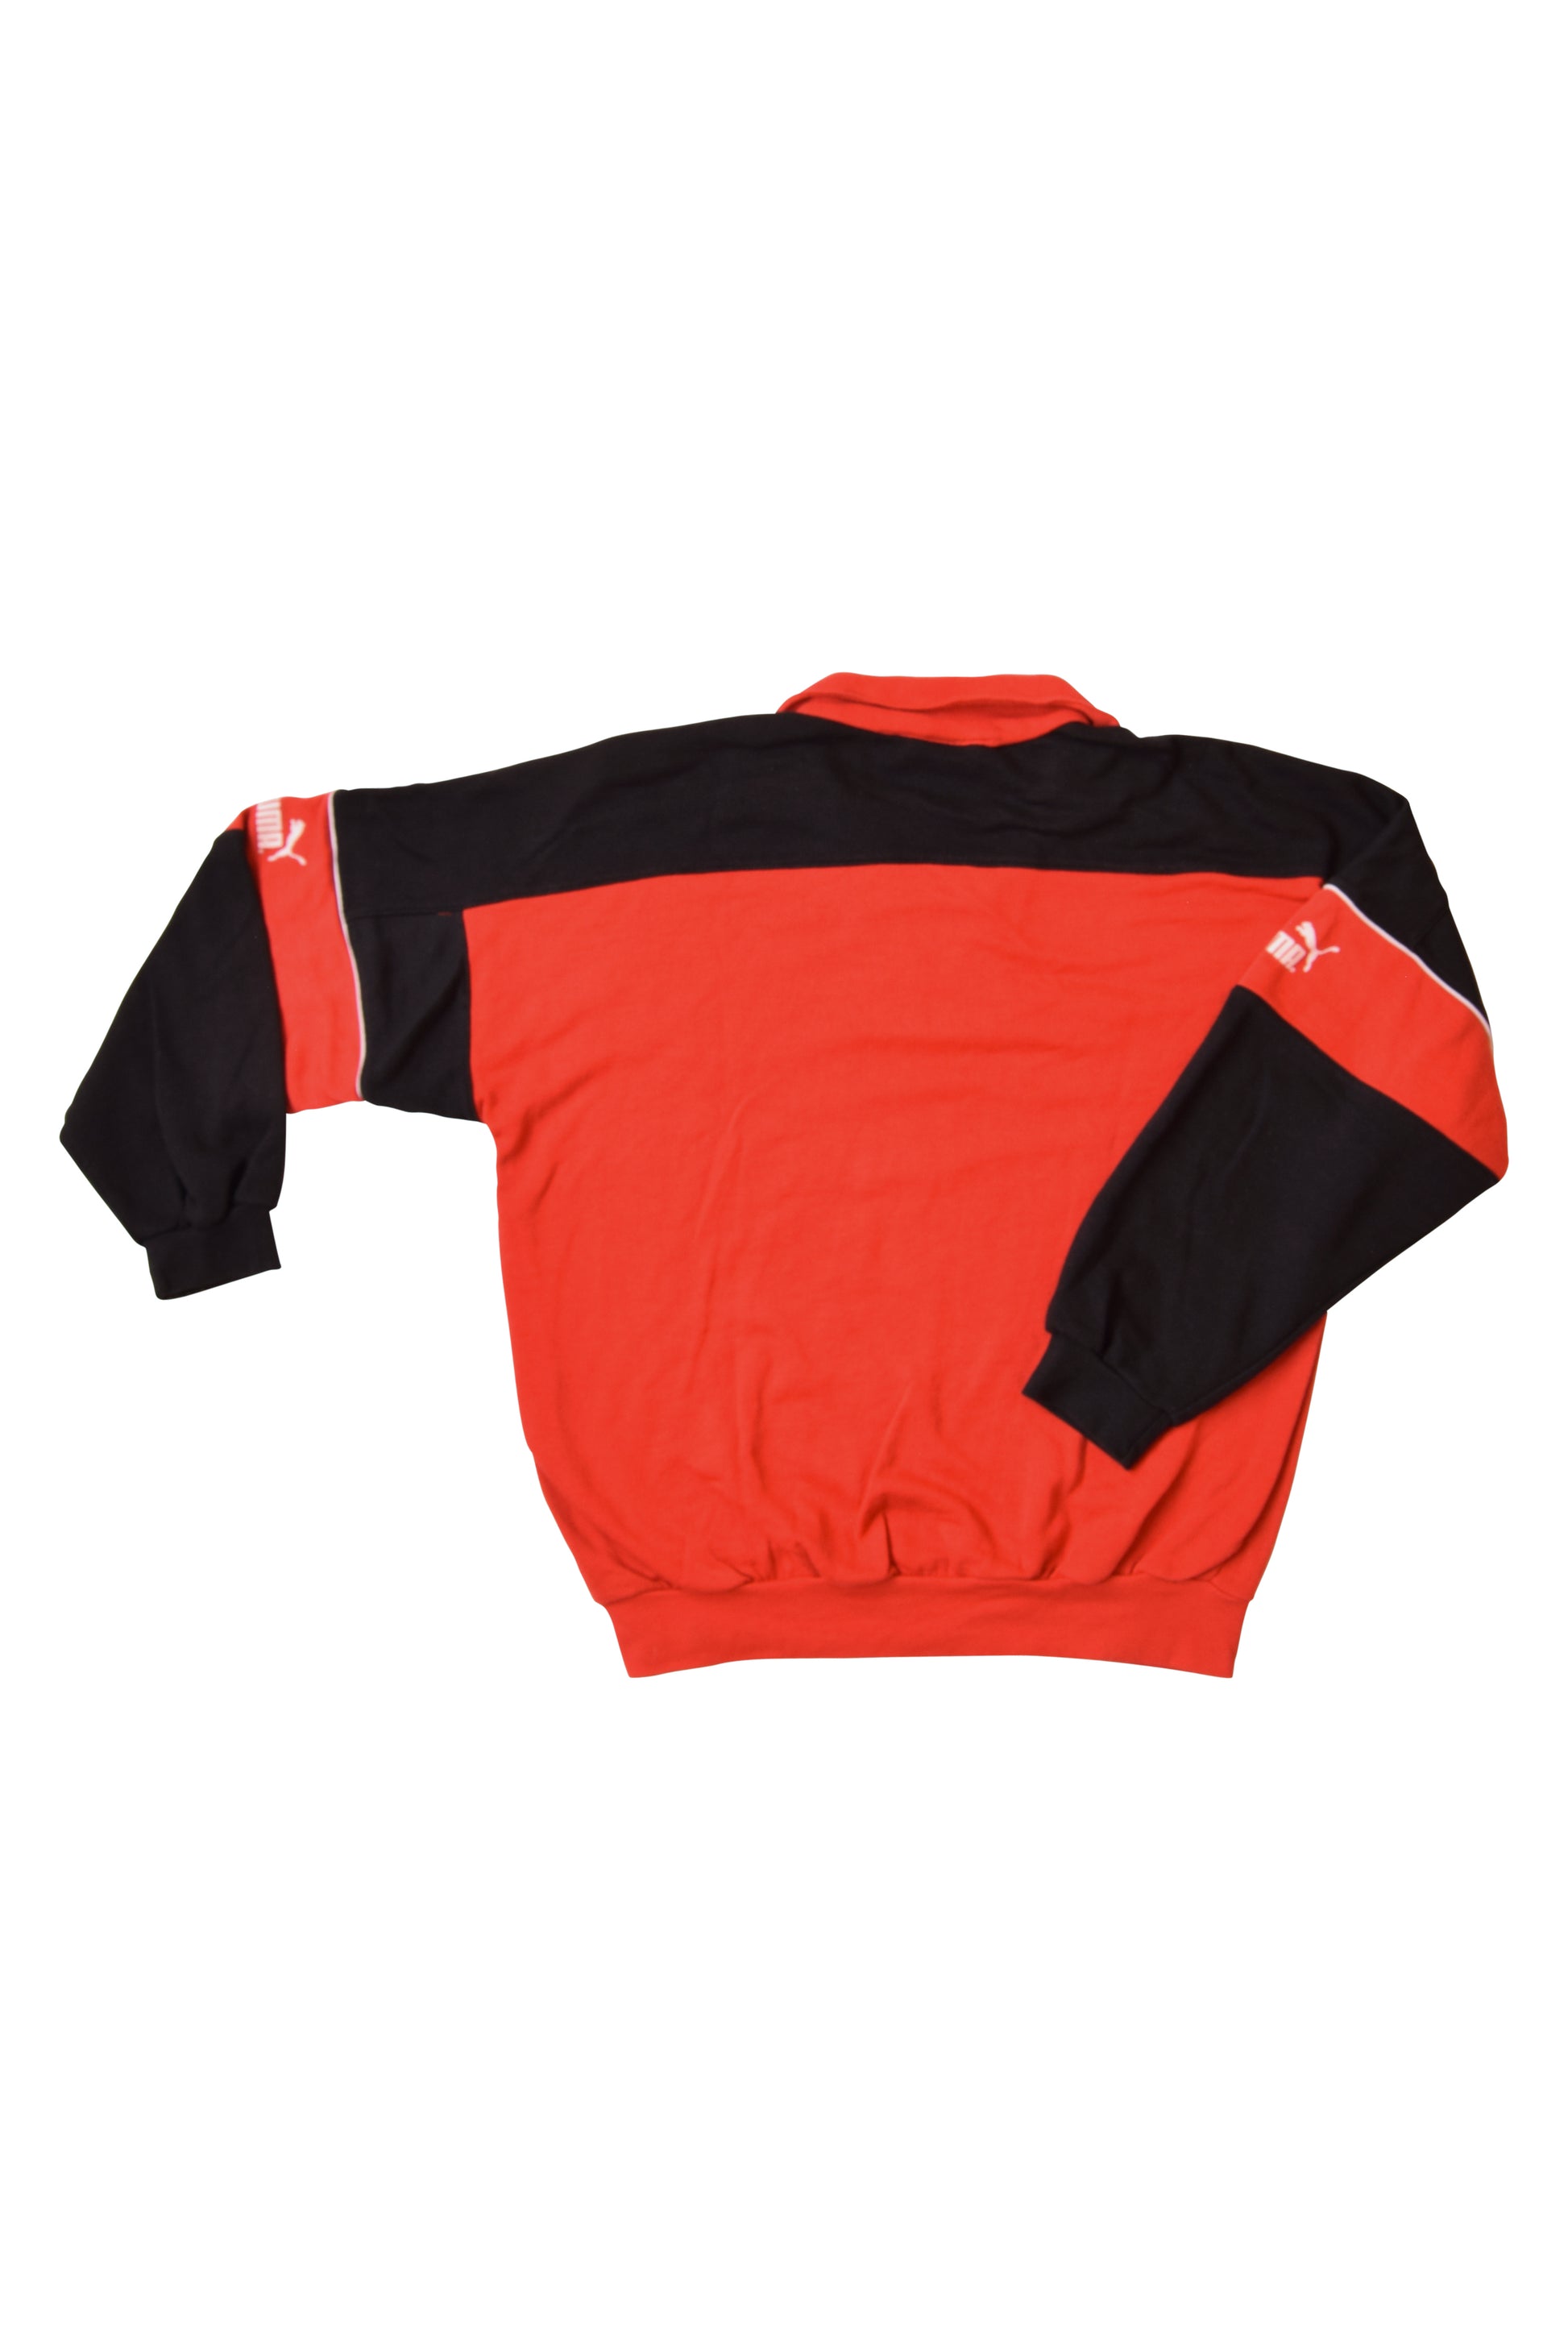 Vintage Eintracht Frankfurt Puma Sweatshirt 90's Size L 